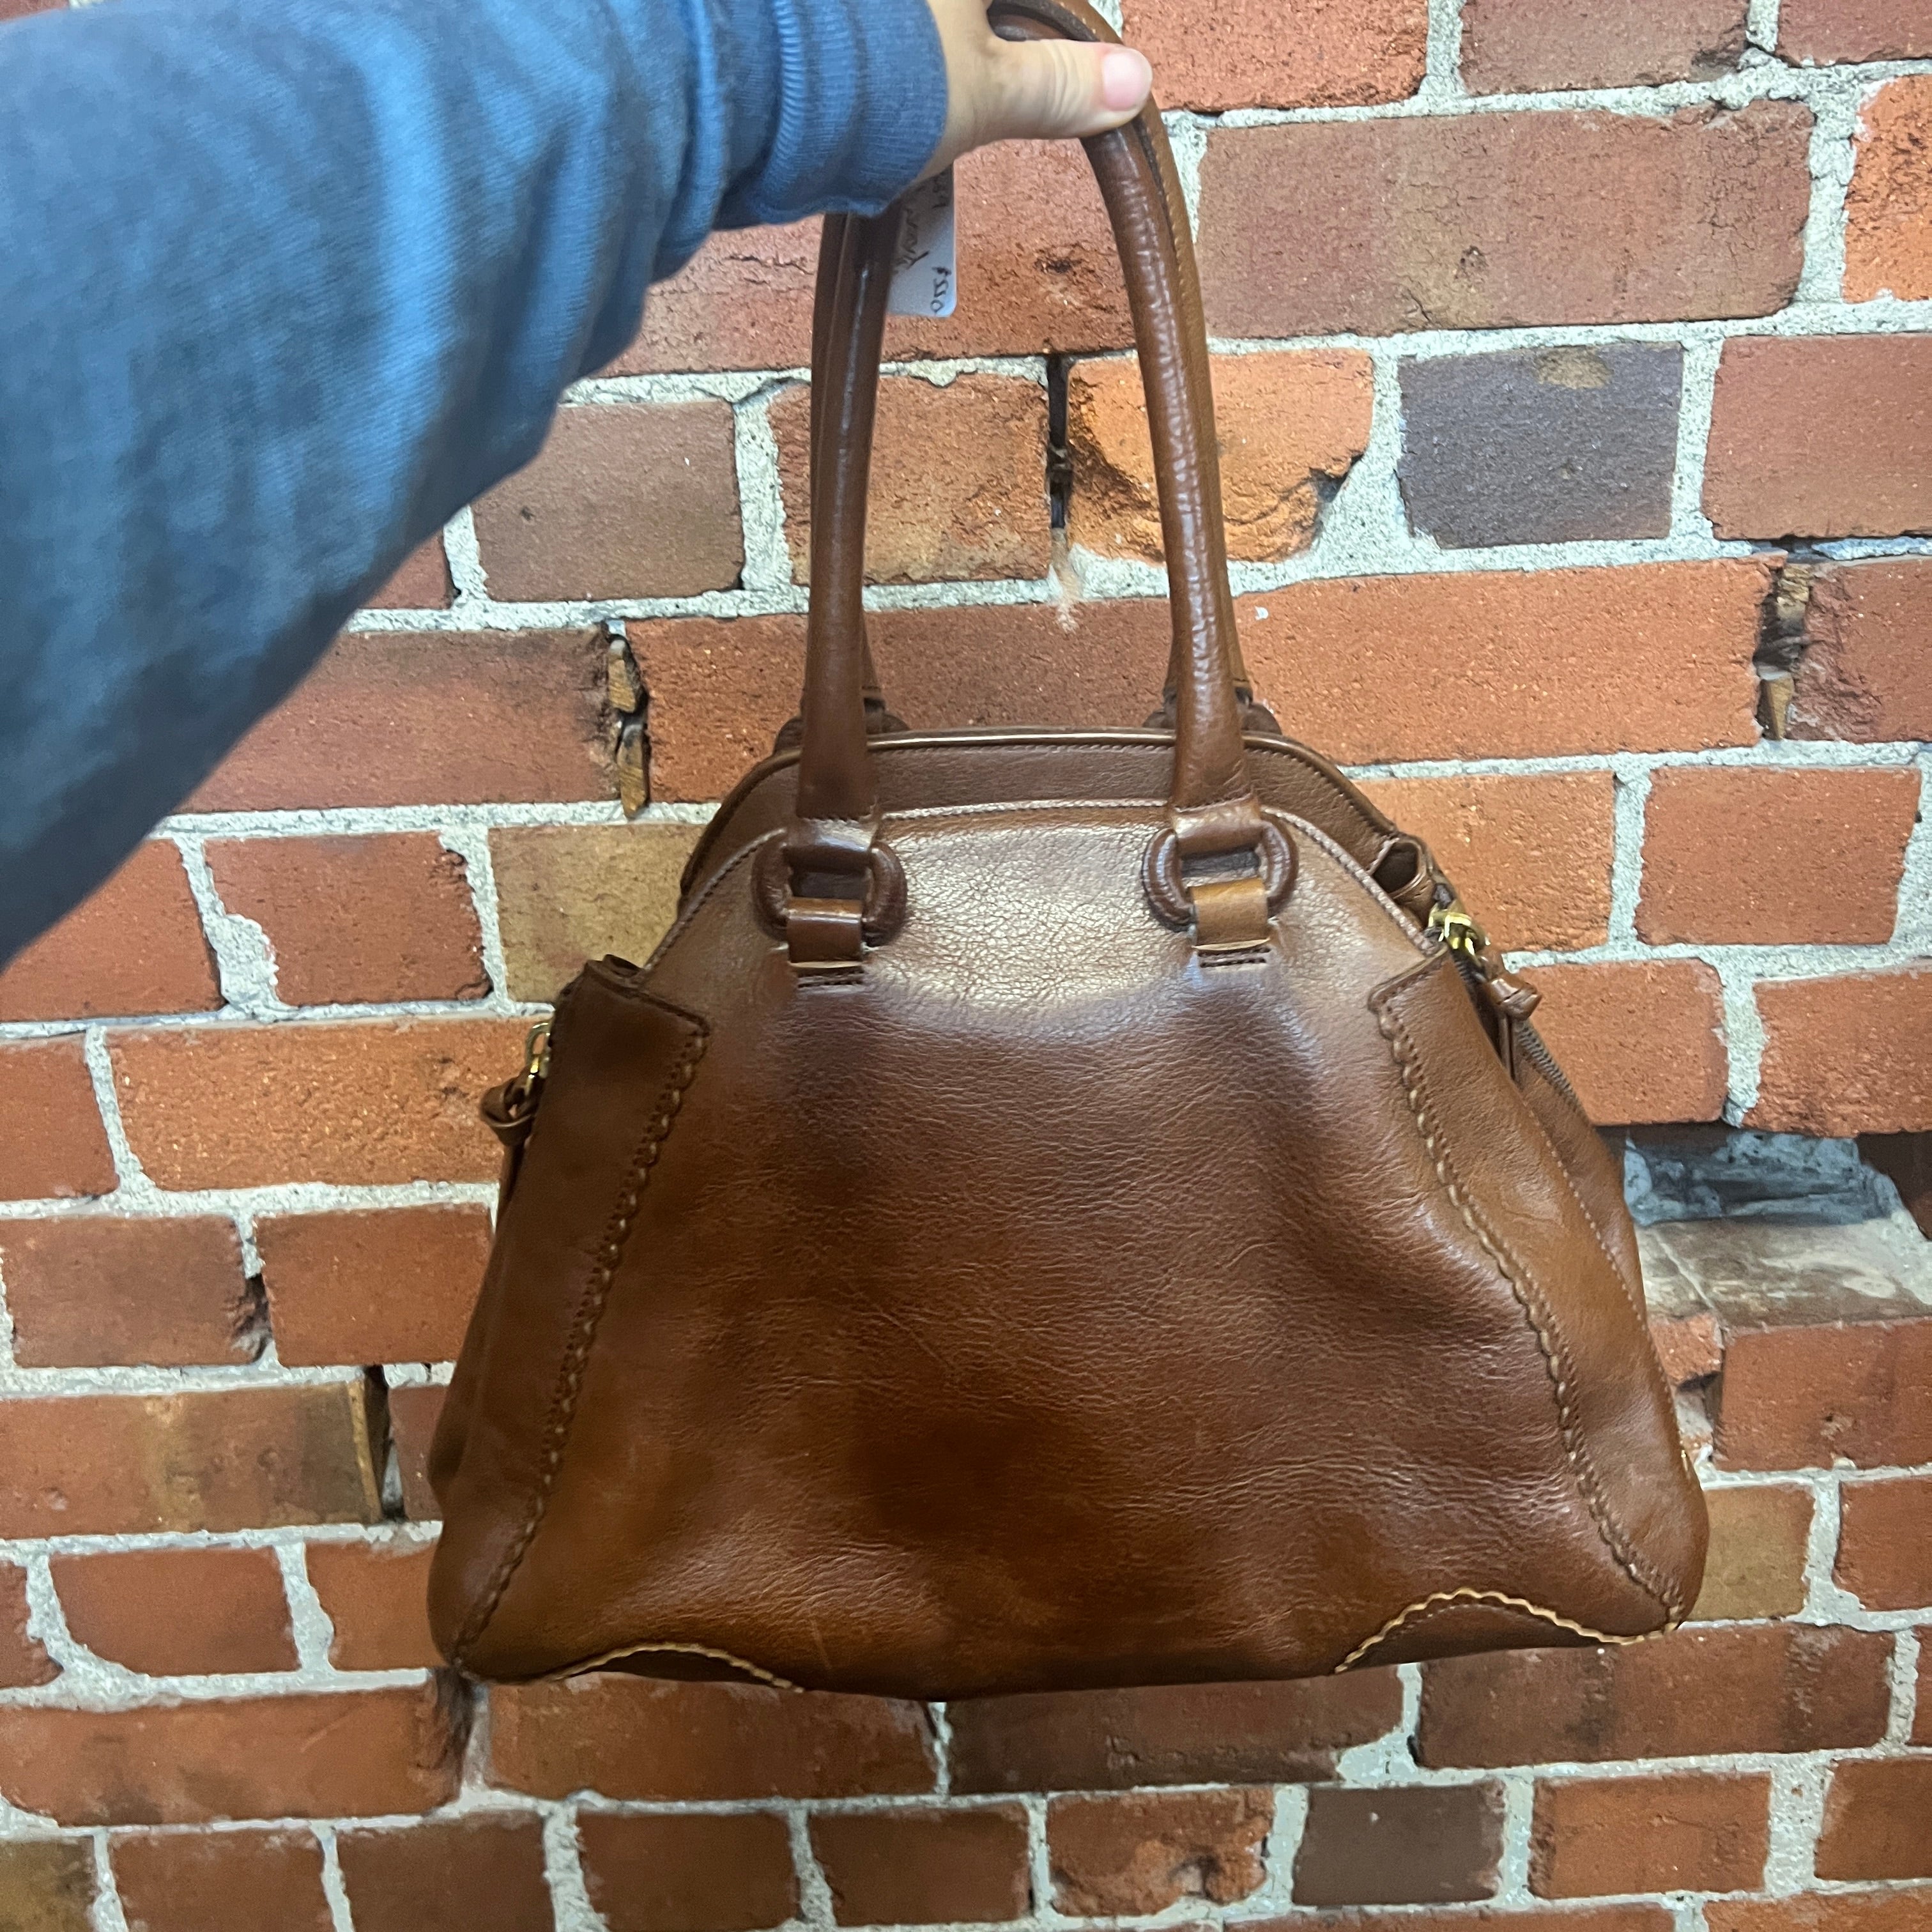 VIVIENNE WESTWOOD leather Yasmin handbag